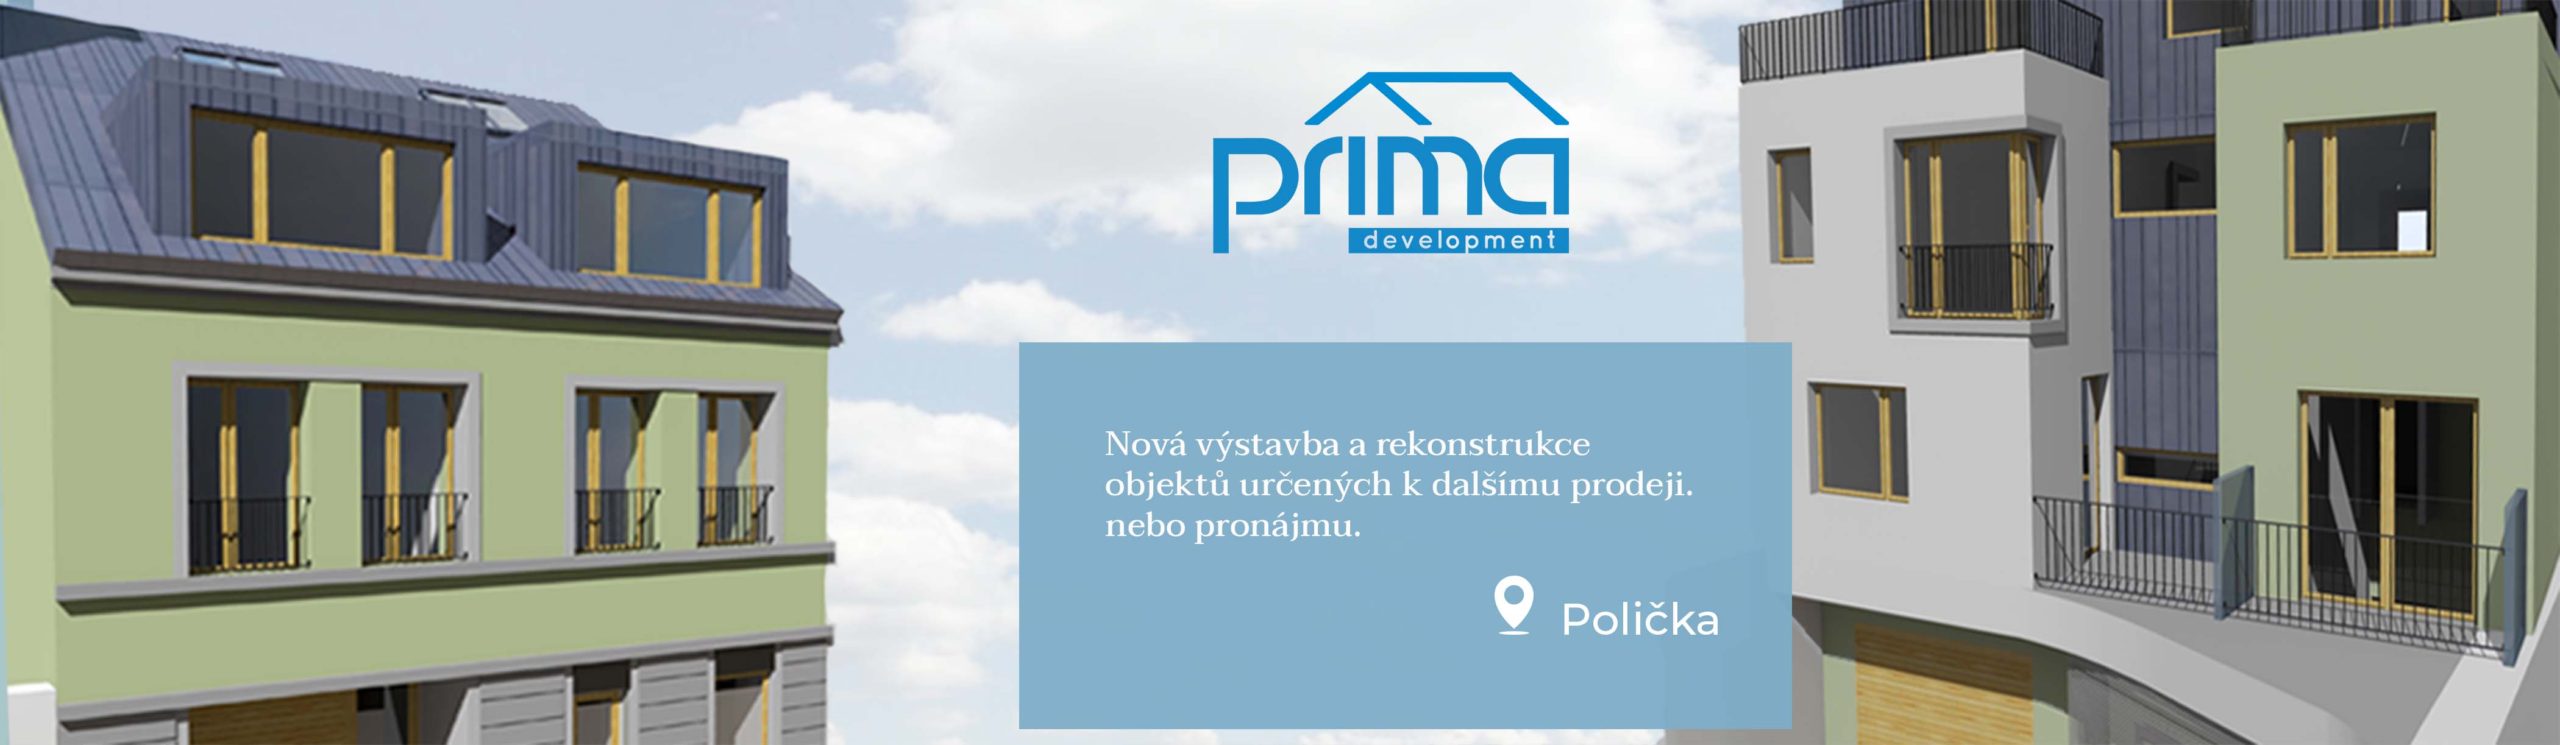 prima_Development (1)